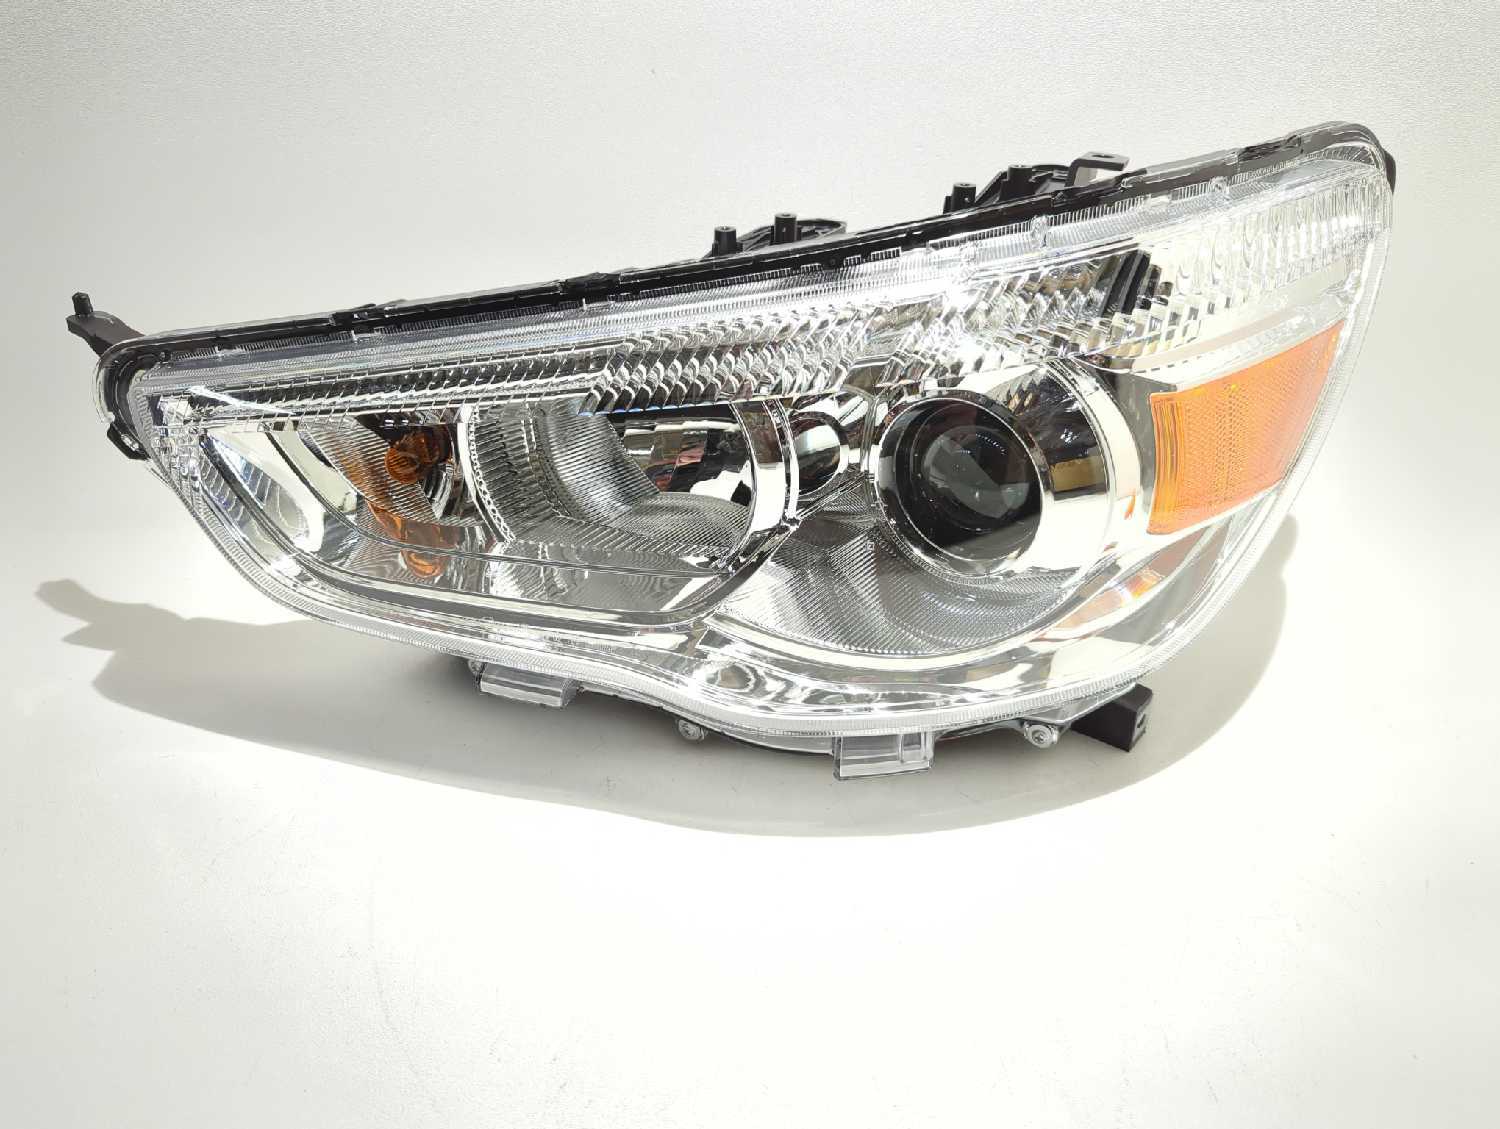 New OEM Genuine Mitsubishi Head Light Lamp 2011-2019 ASX Halogen LH 8301C873 - $198.00